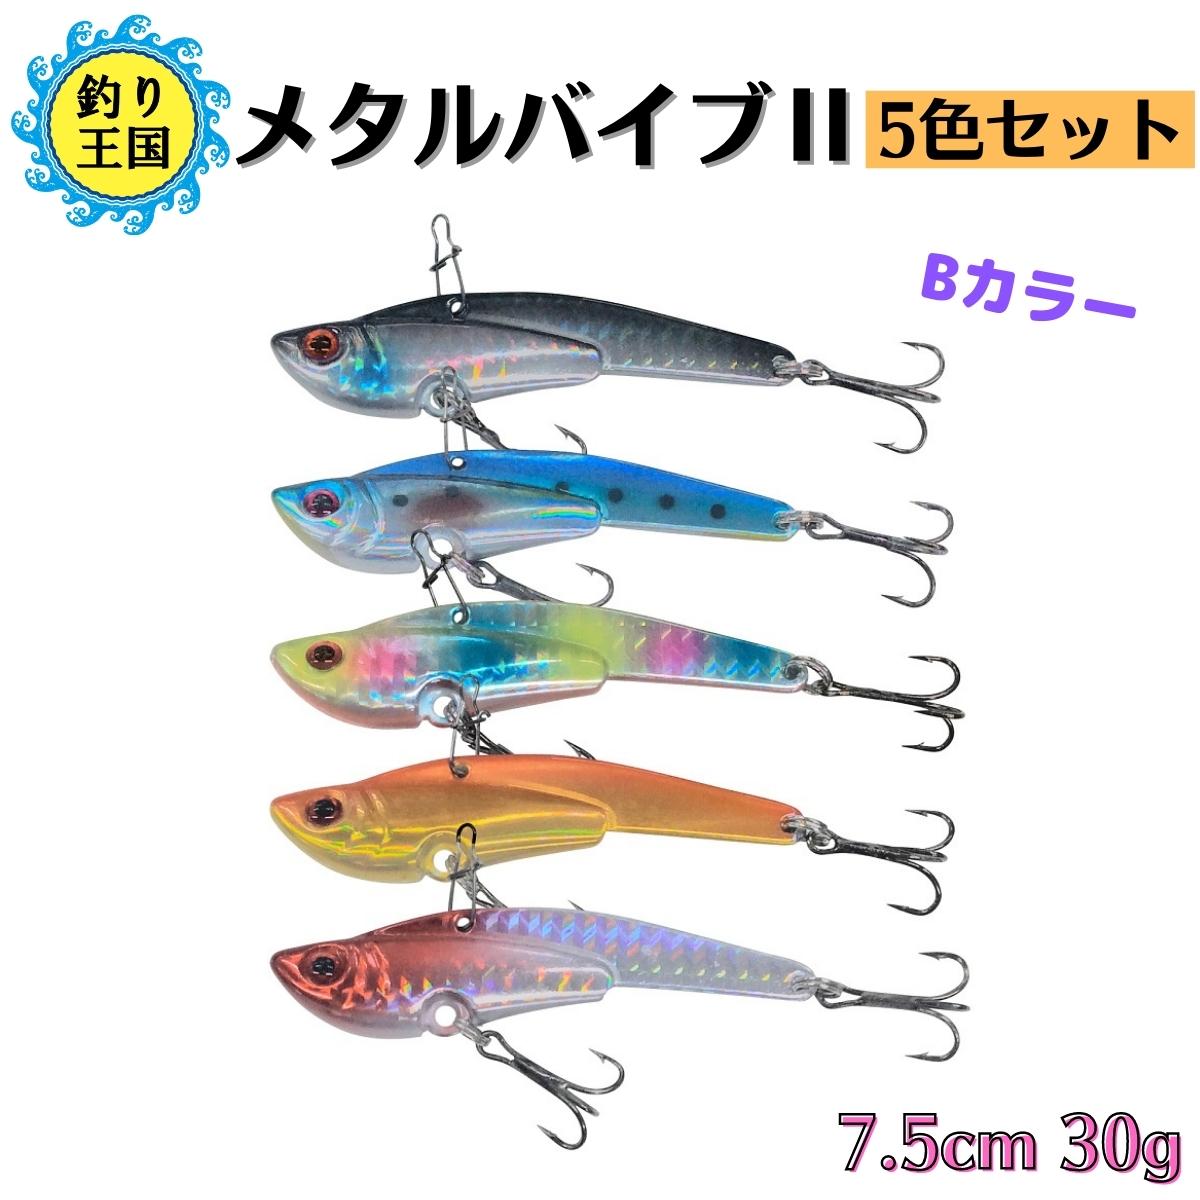 https://shop.r10s.jp/fishingkingdom/cabinet/biiino/item/main-image/20220425145430_1.jpg?n1bx0hrym6l5f